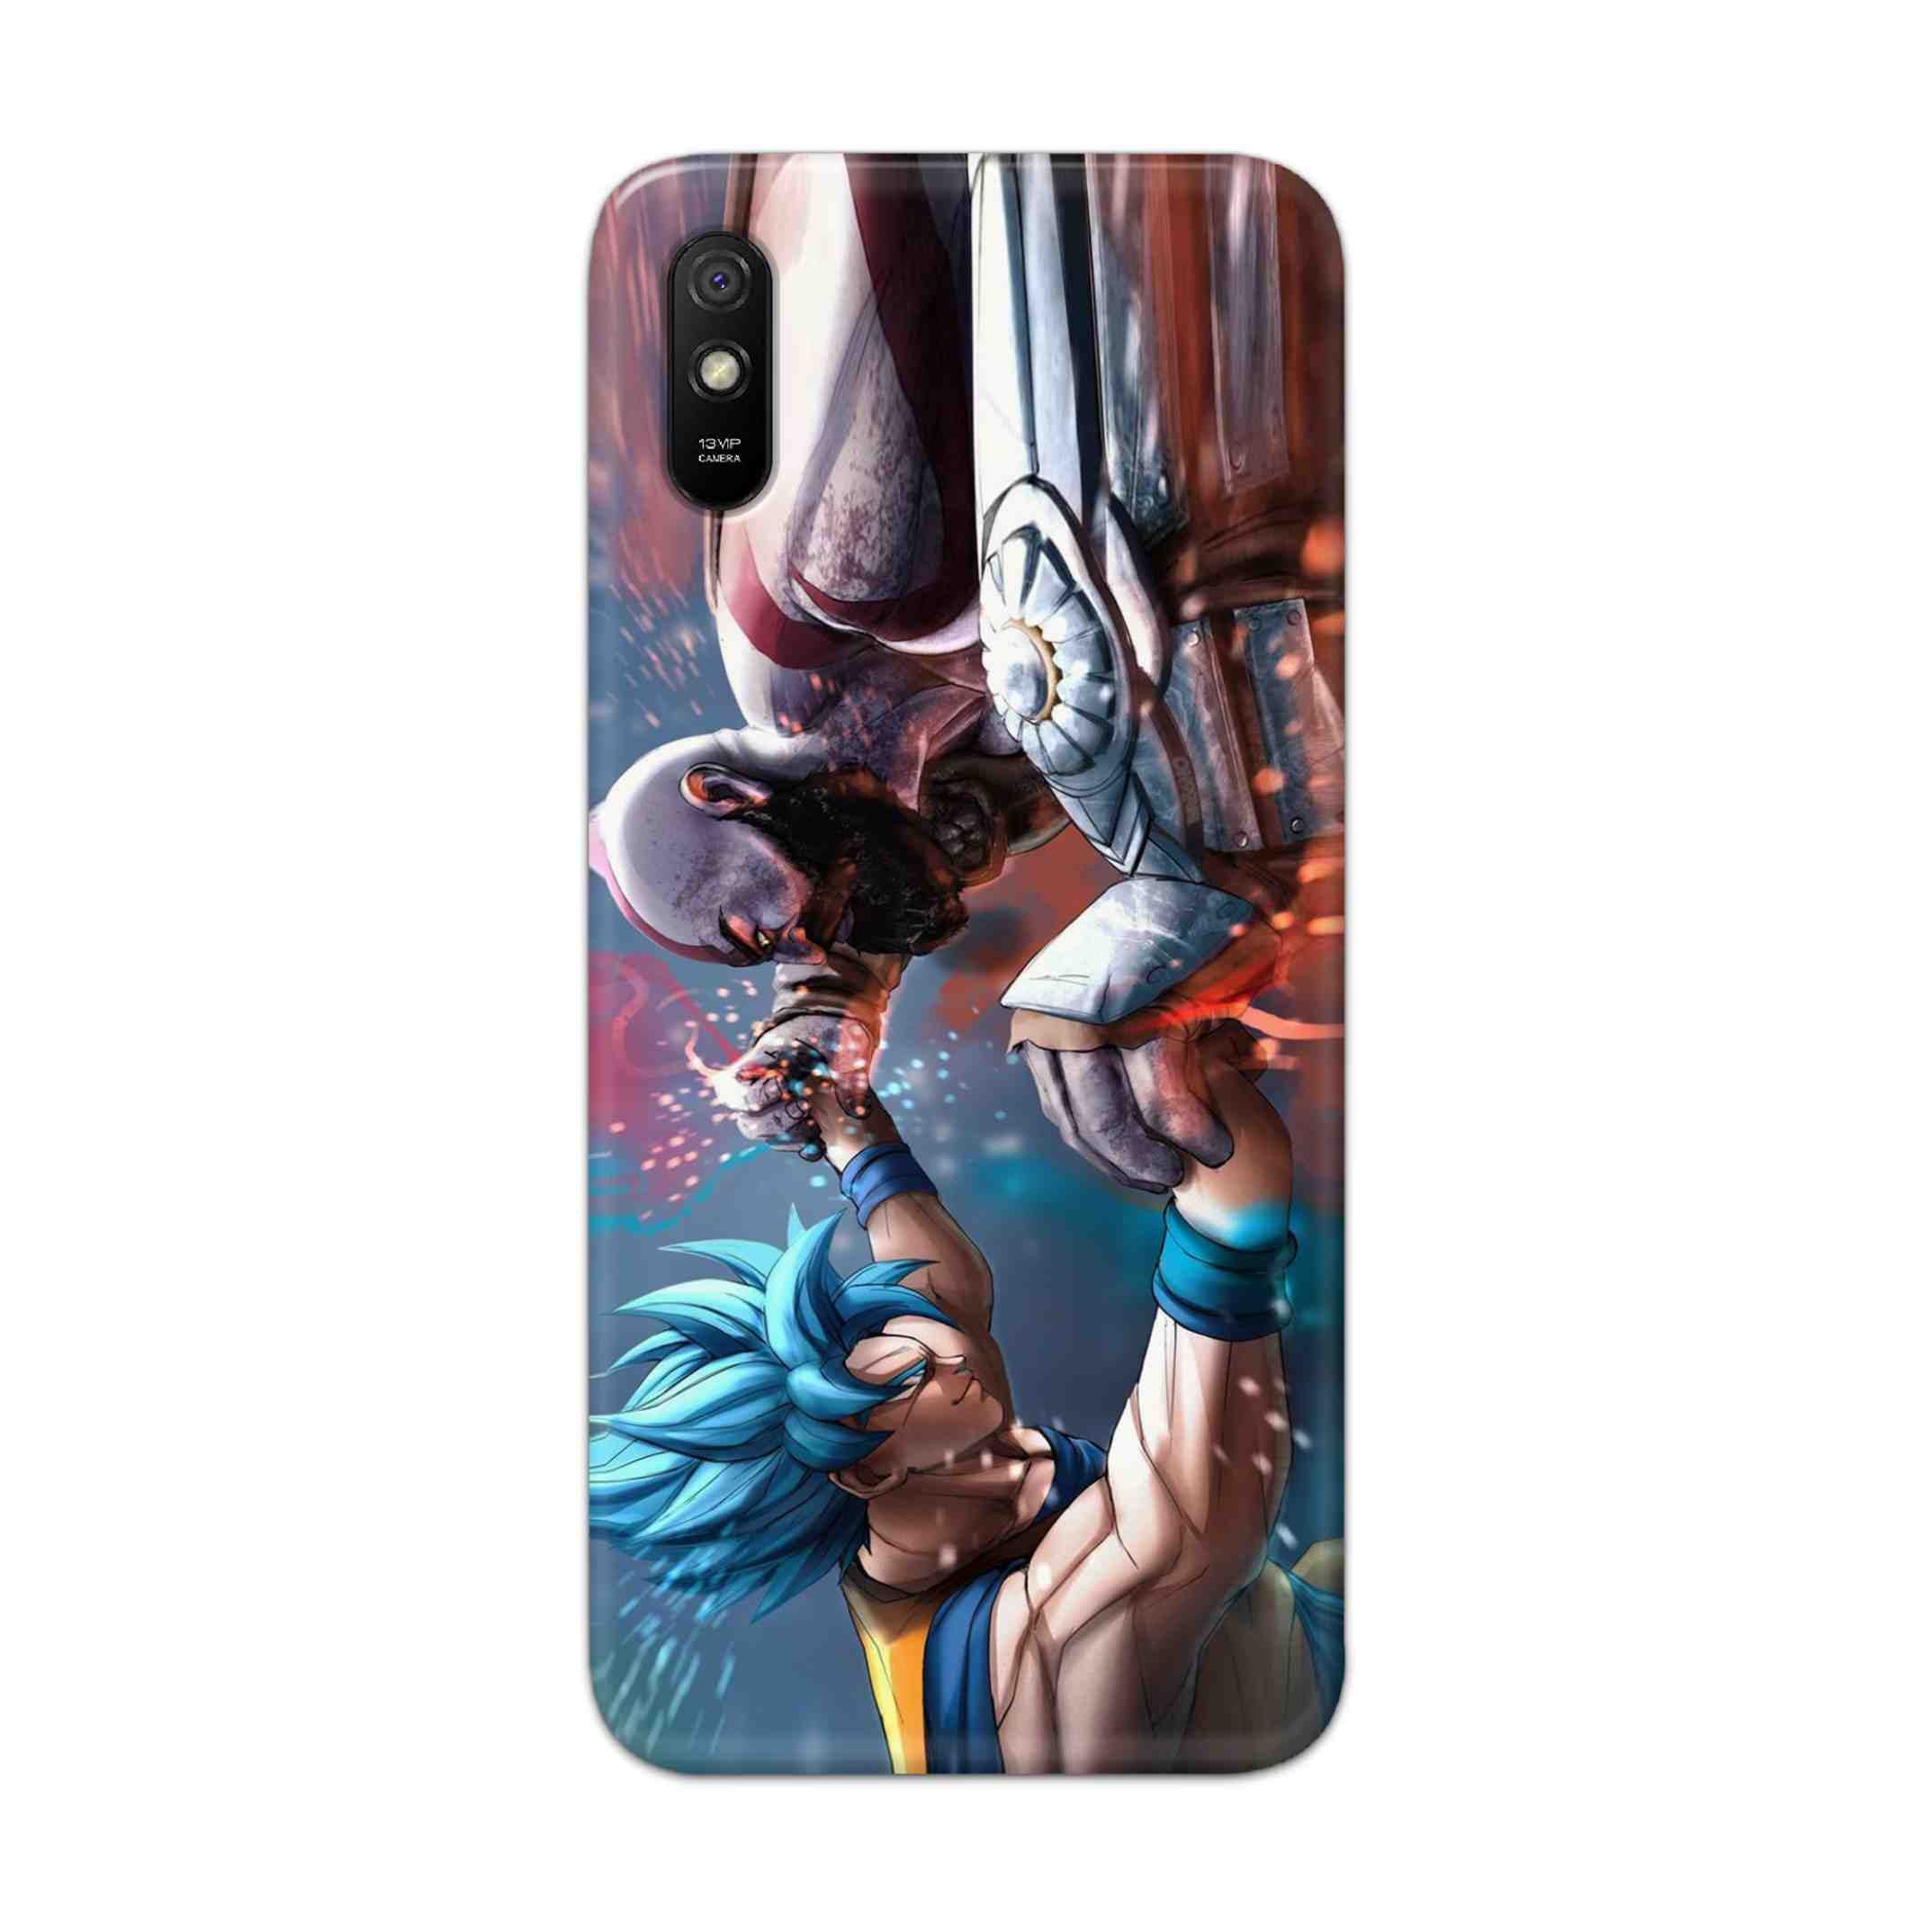 Buy Goku Vs Kratos Hard Back Mobile Phone Case Cover For Redmi 9A Online